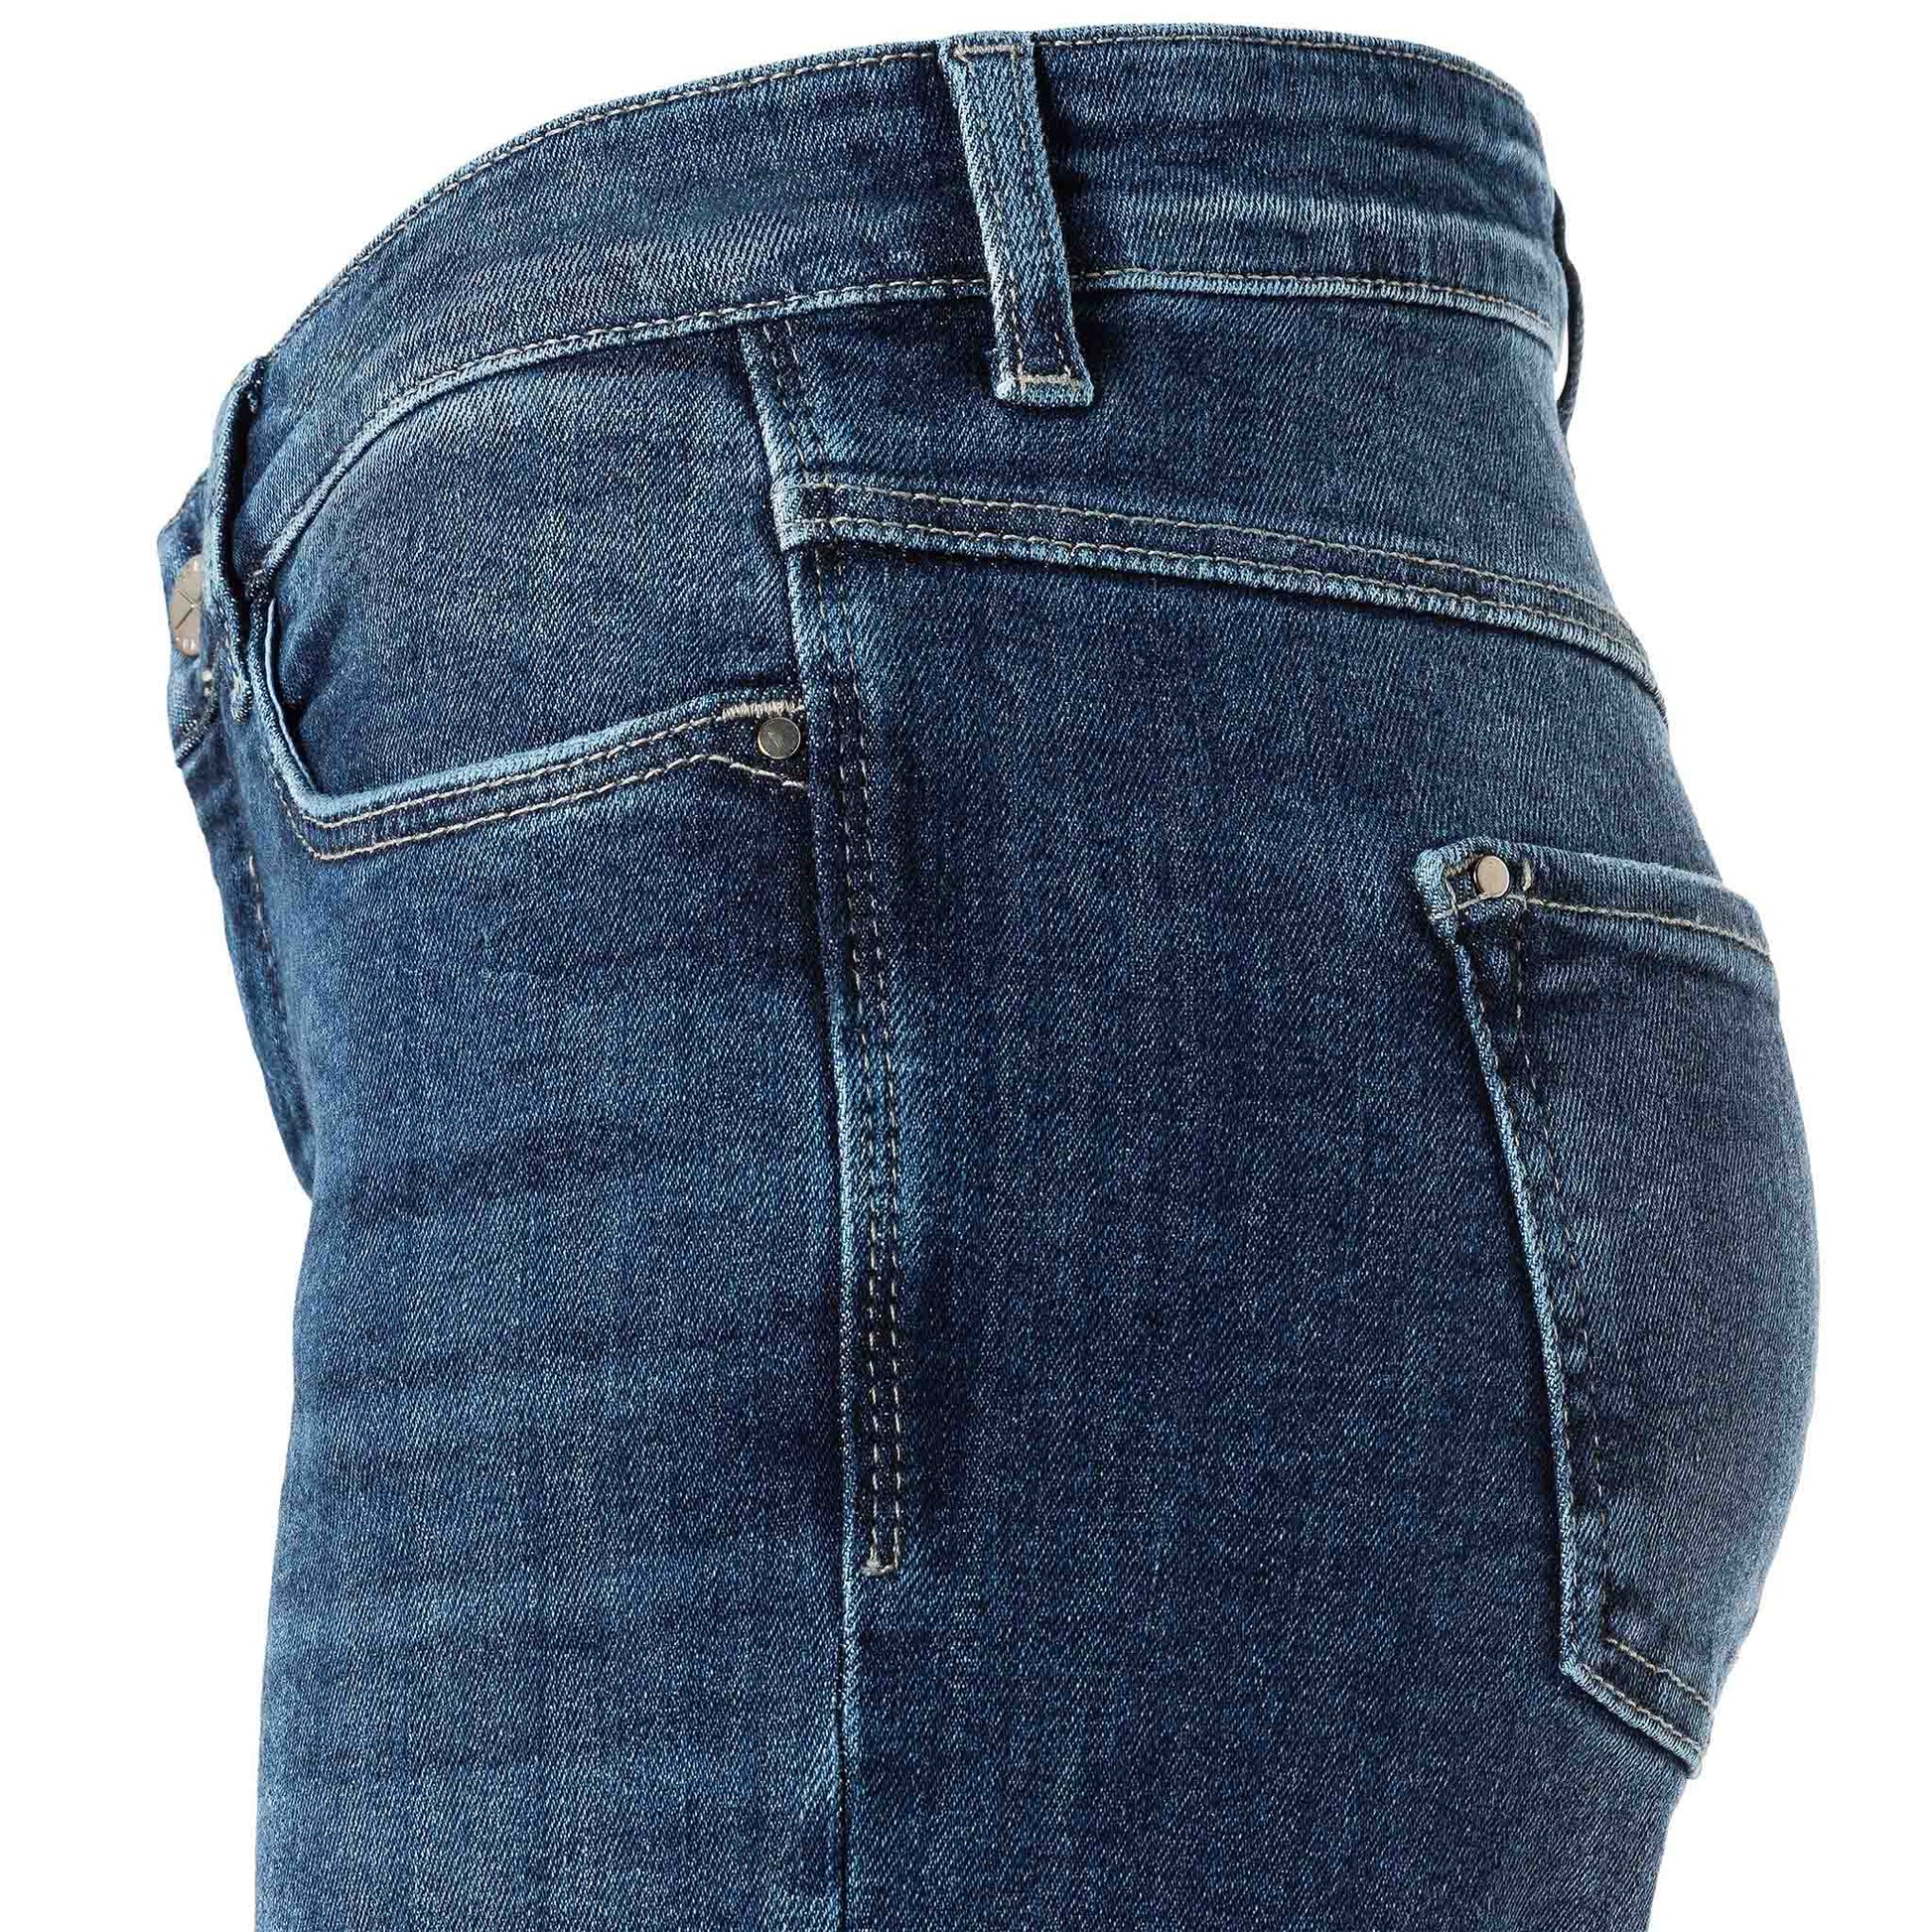 kleding lange vrouwen mac jeans dream wide auth cobalt